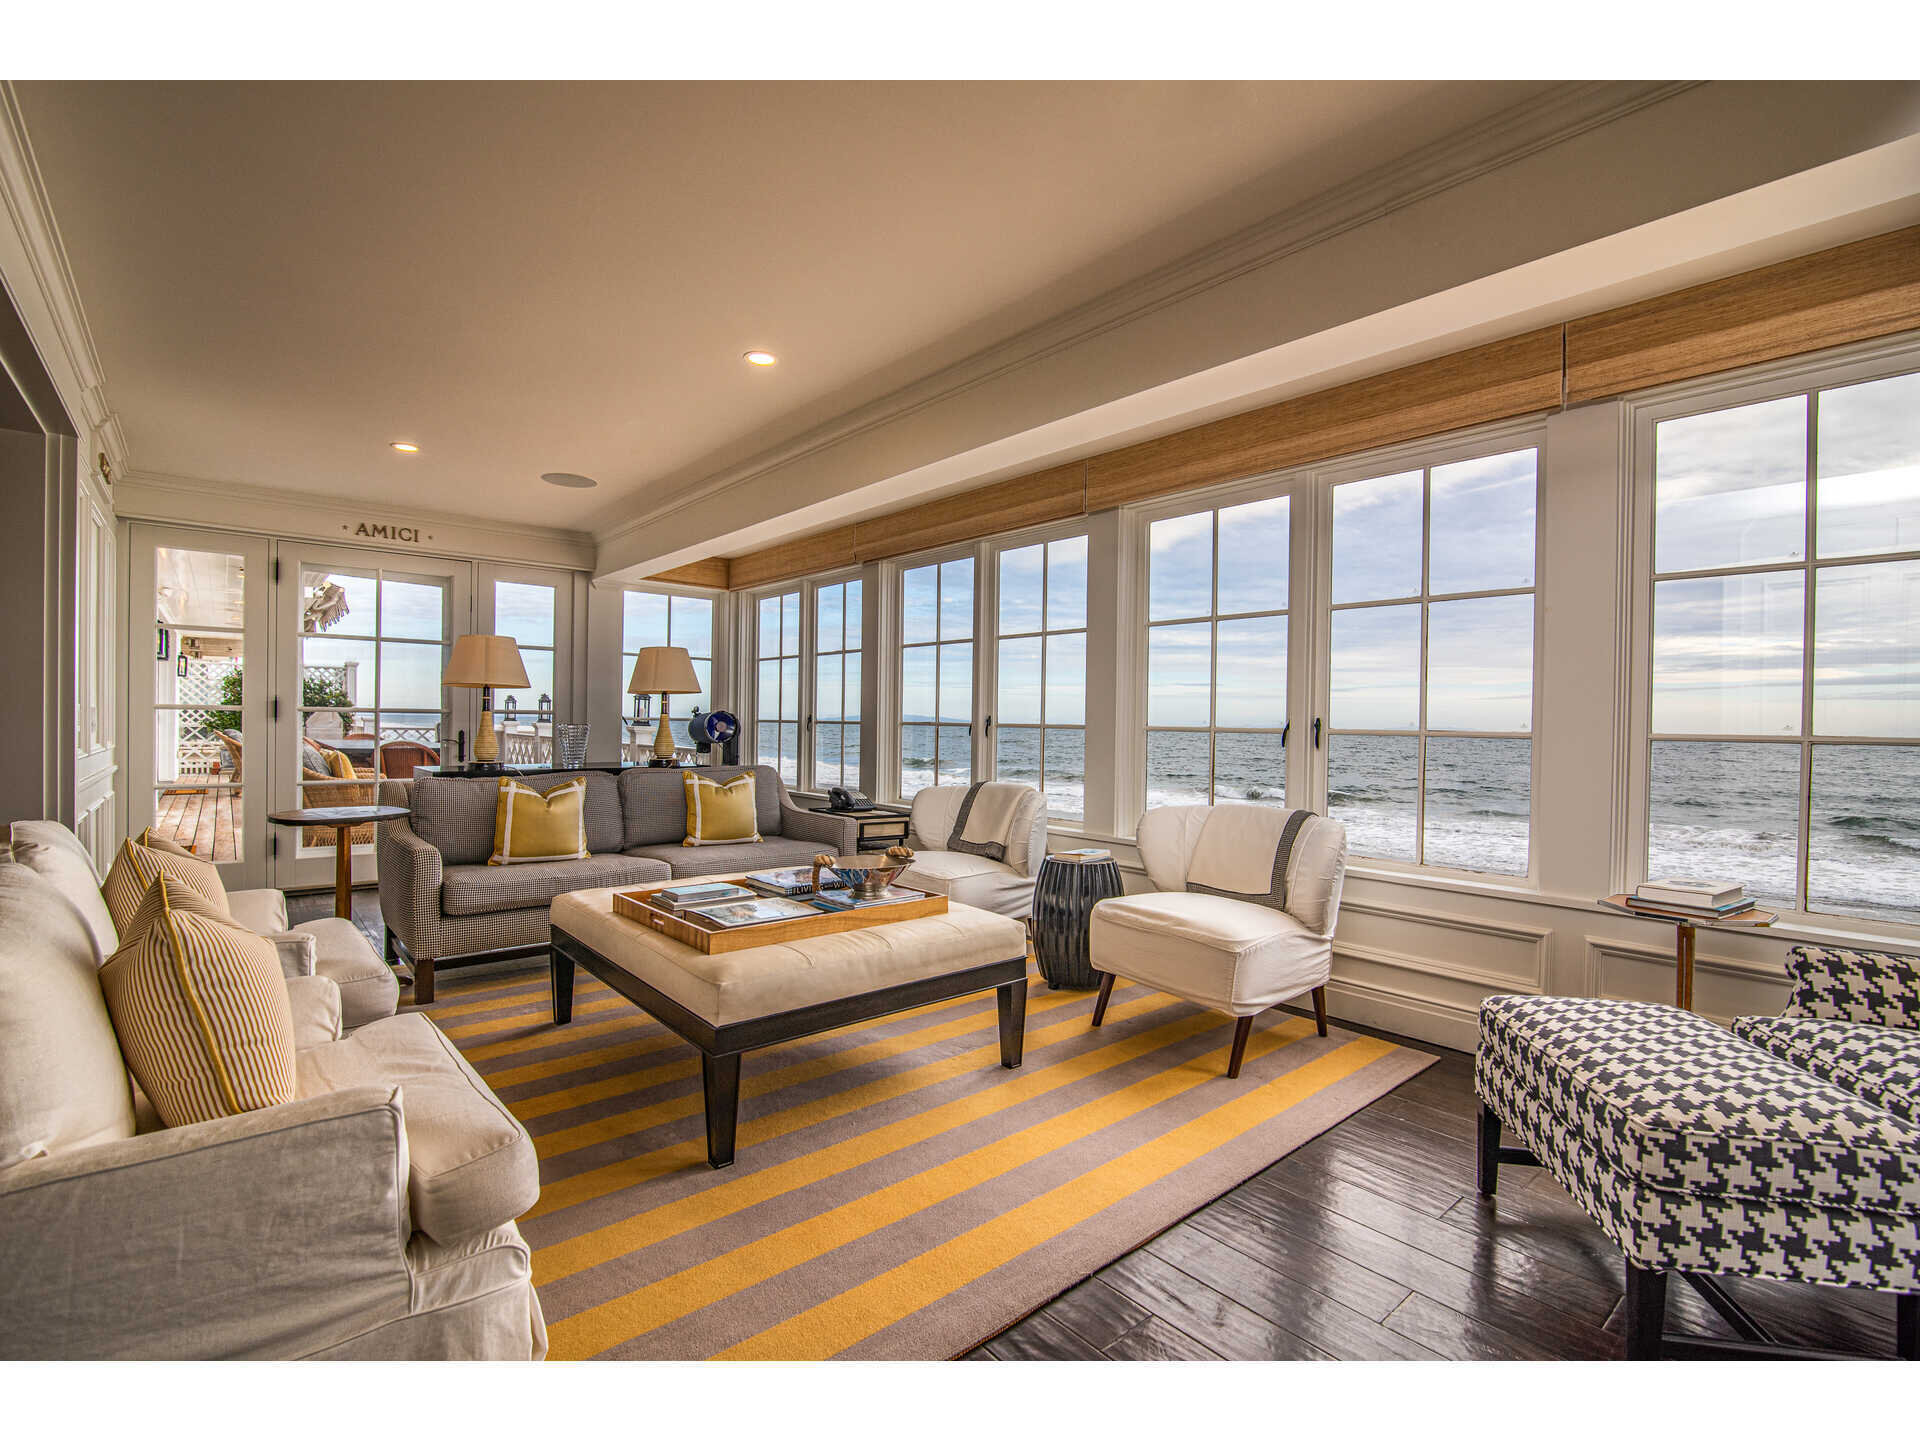 Francis York A Resort Developer’s Oceanfront Malibu Mansion4.jpg